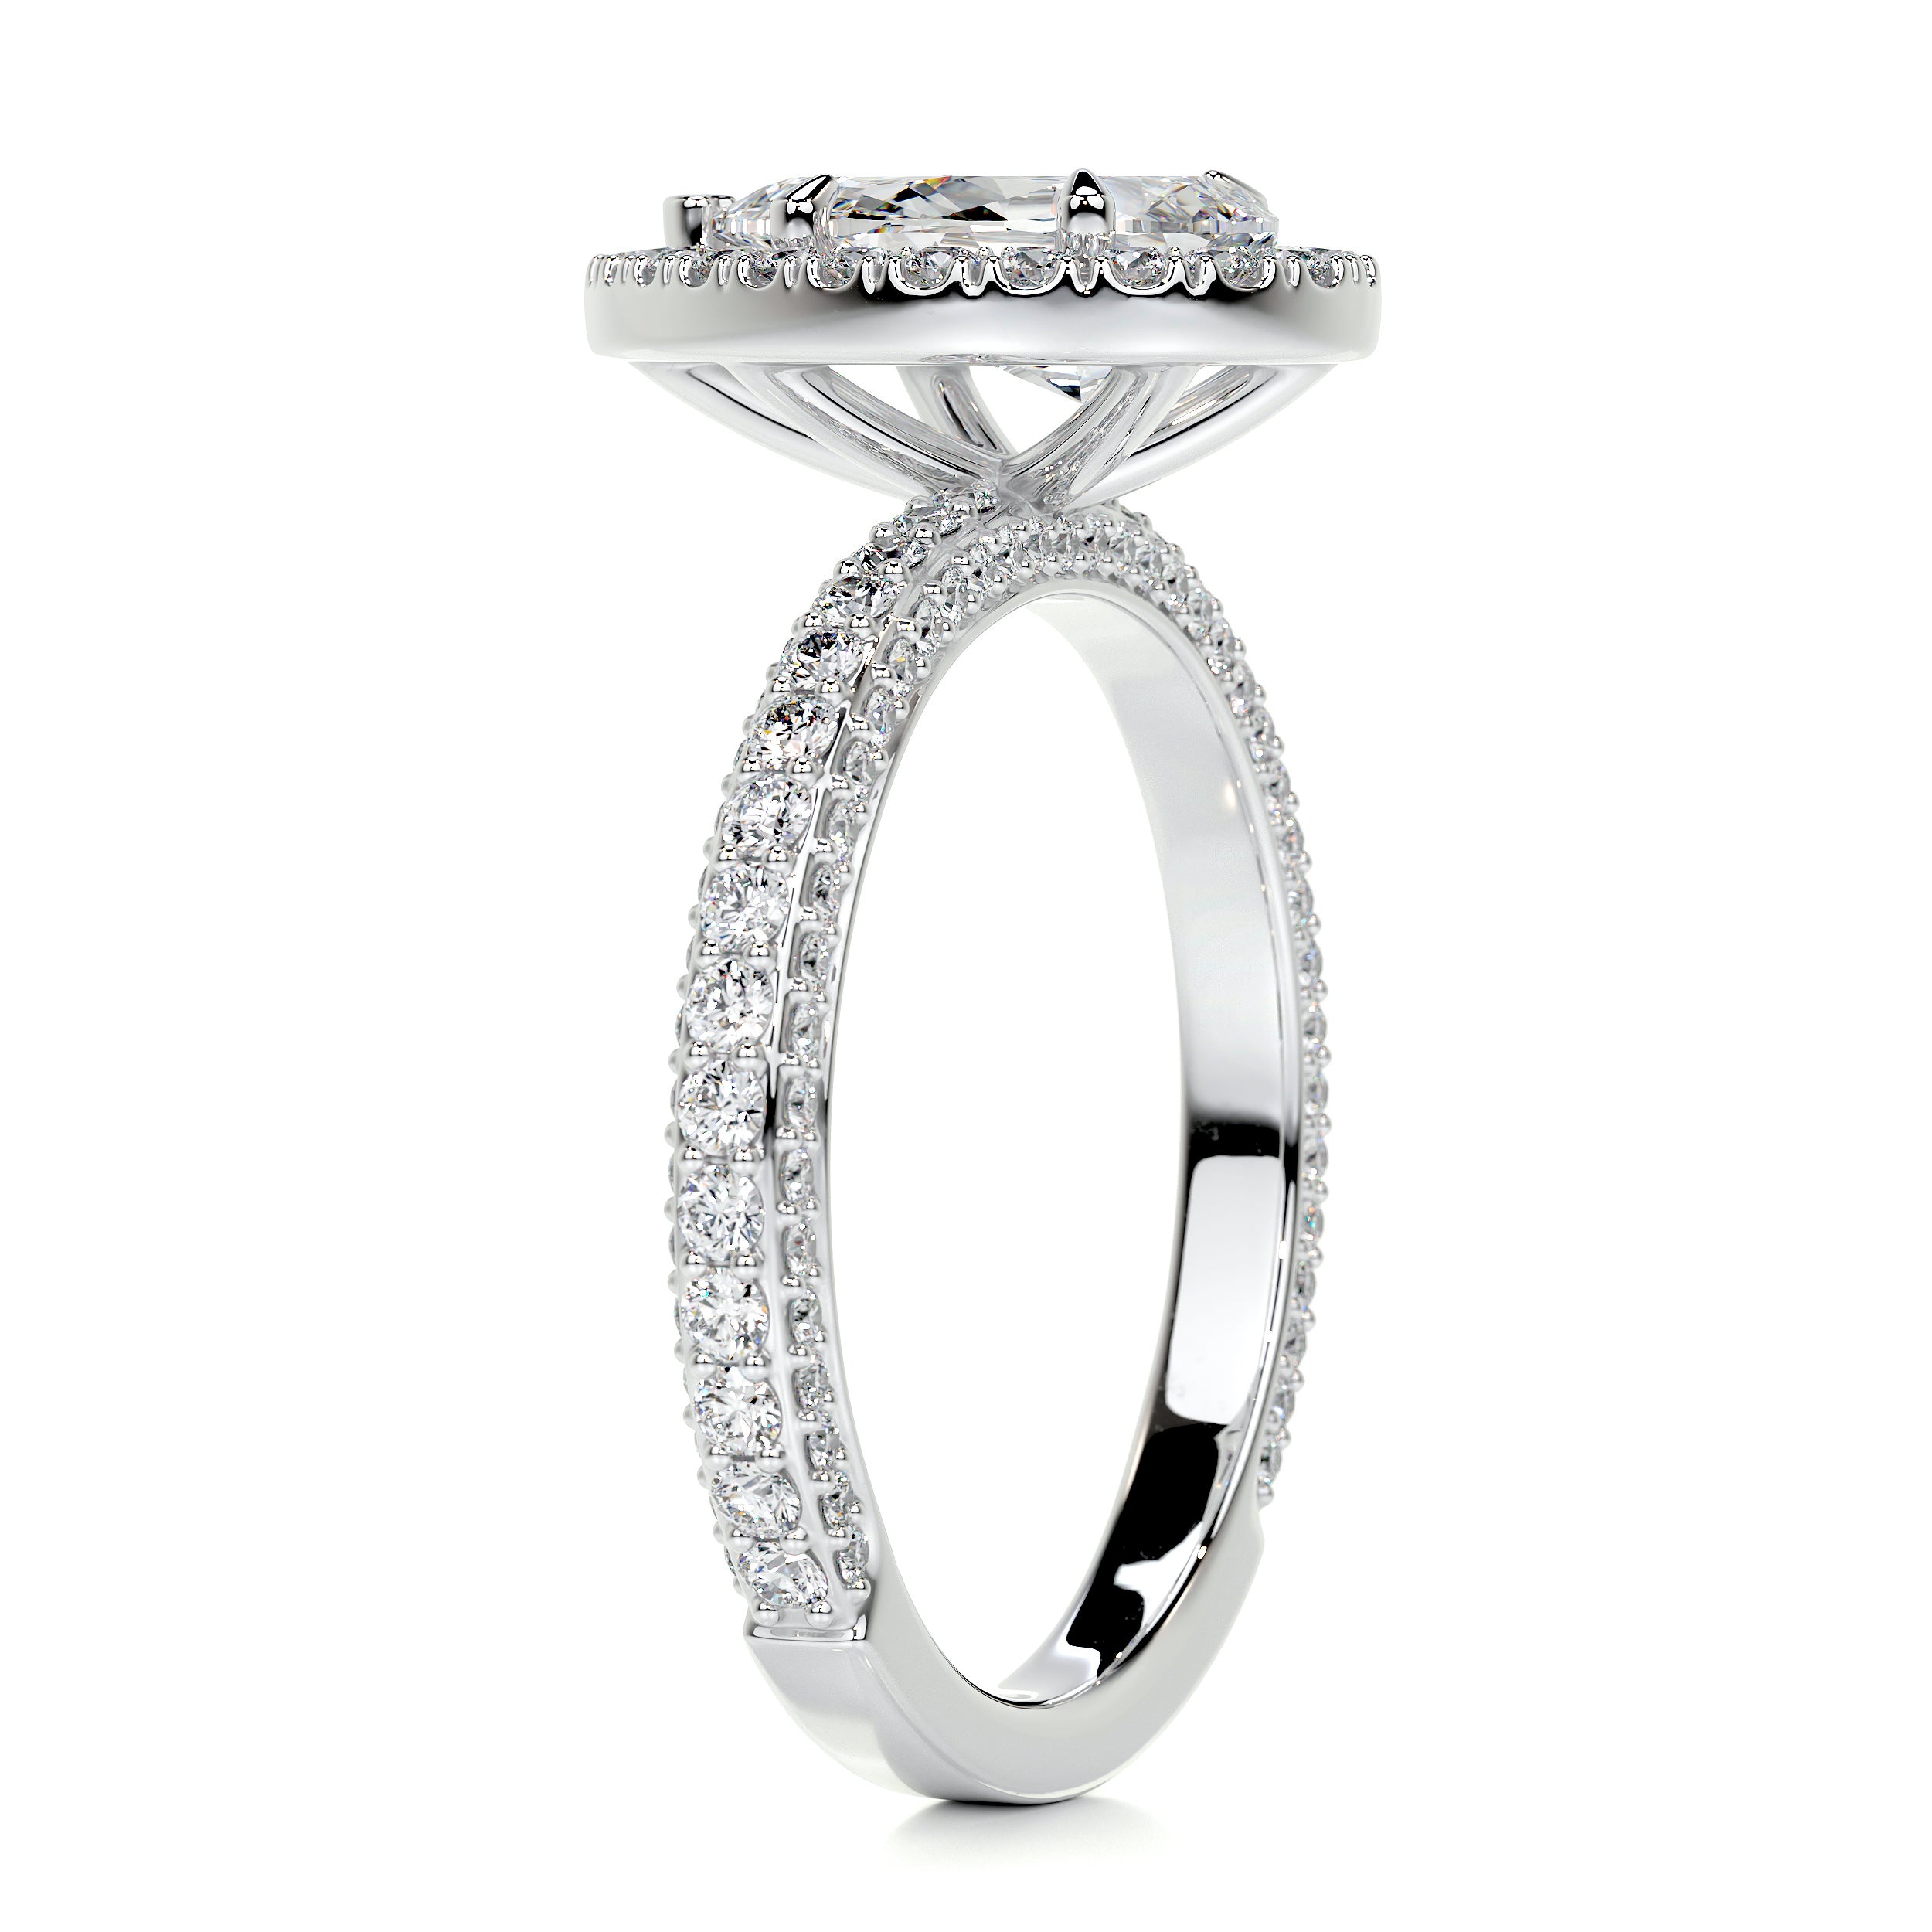 Beverly Diamond Engagement Ring   (2.5 Carat) -14K White Gold